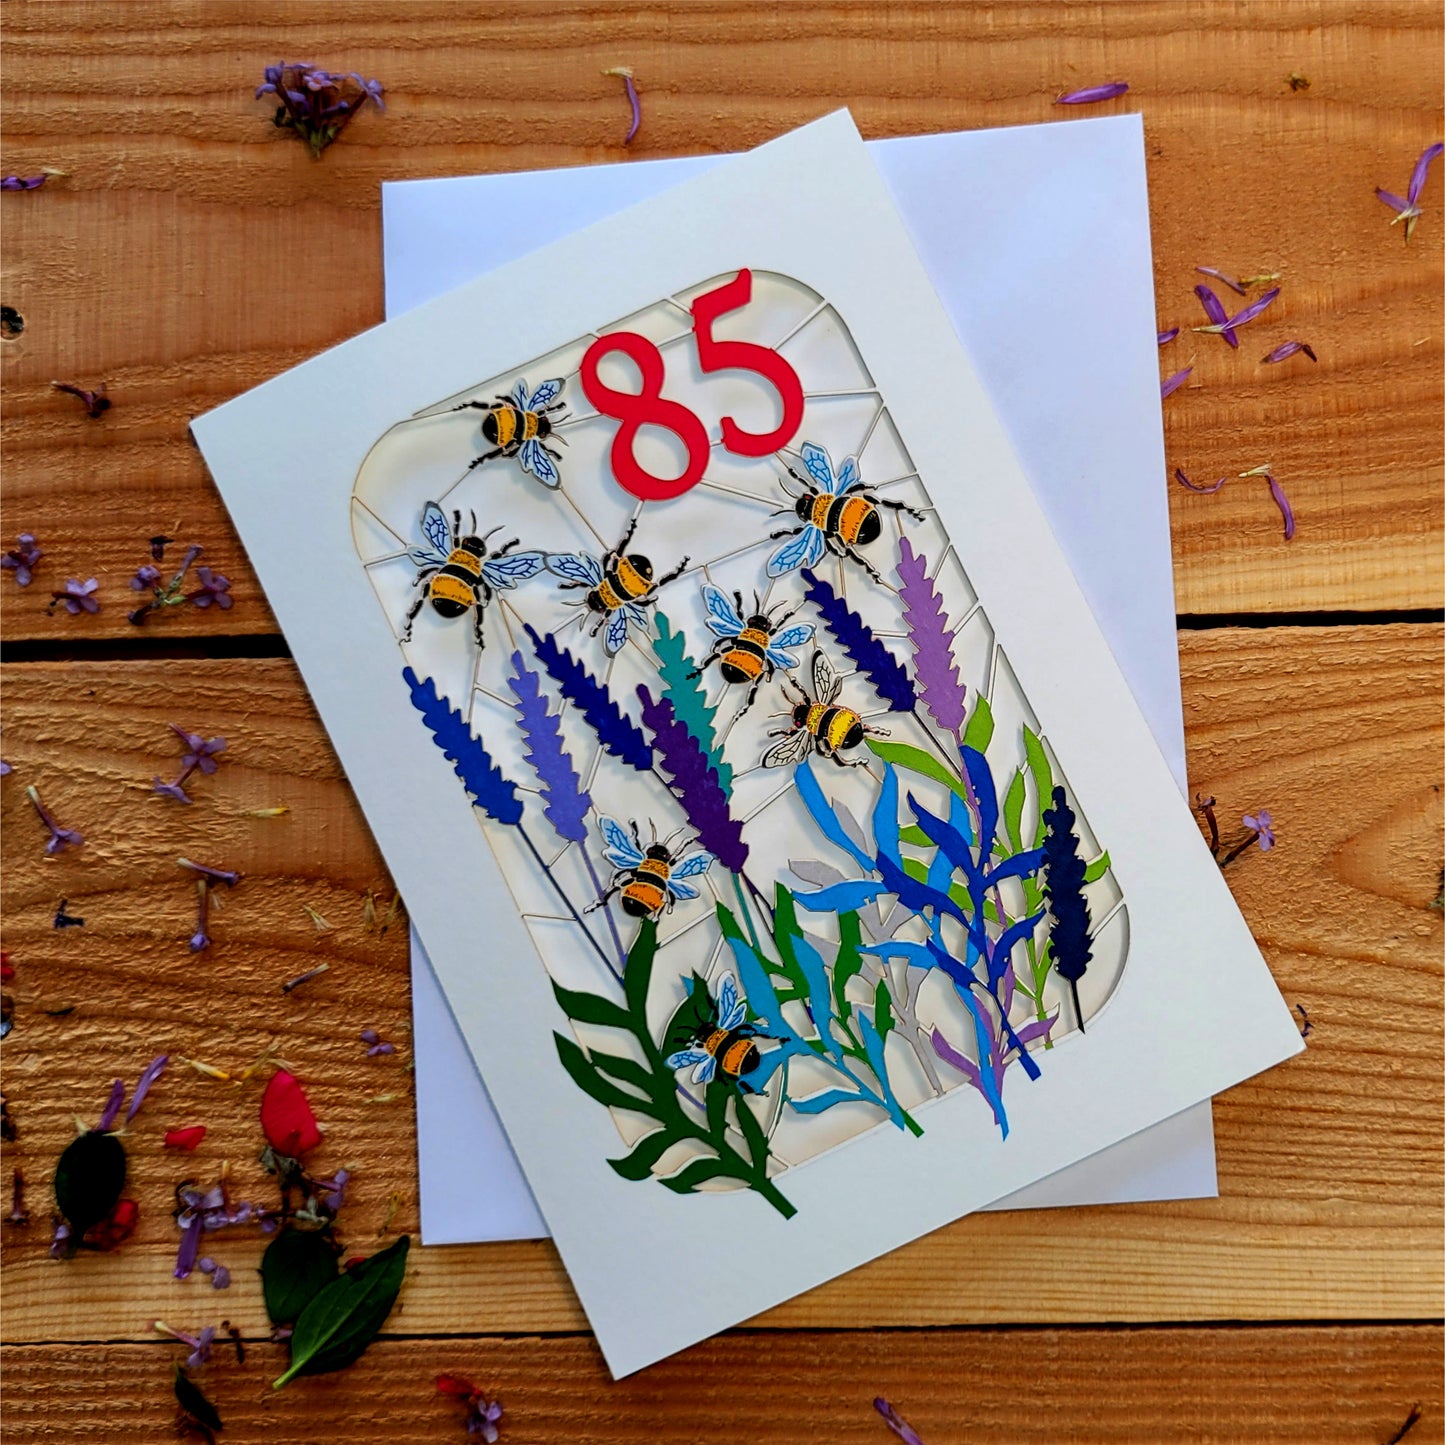 Age 85 Birthday Card, 85th Birthday Card, Bee Card - Be085